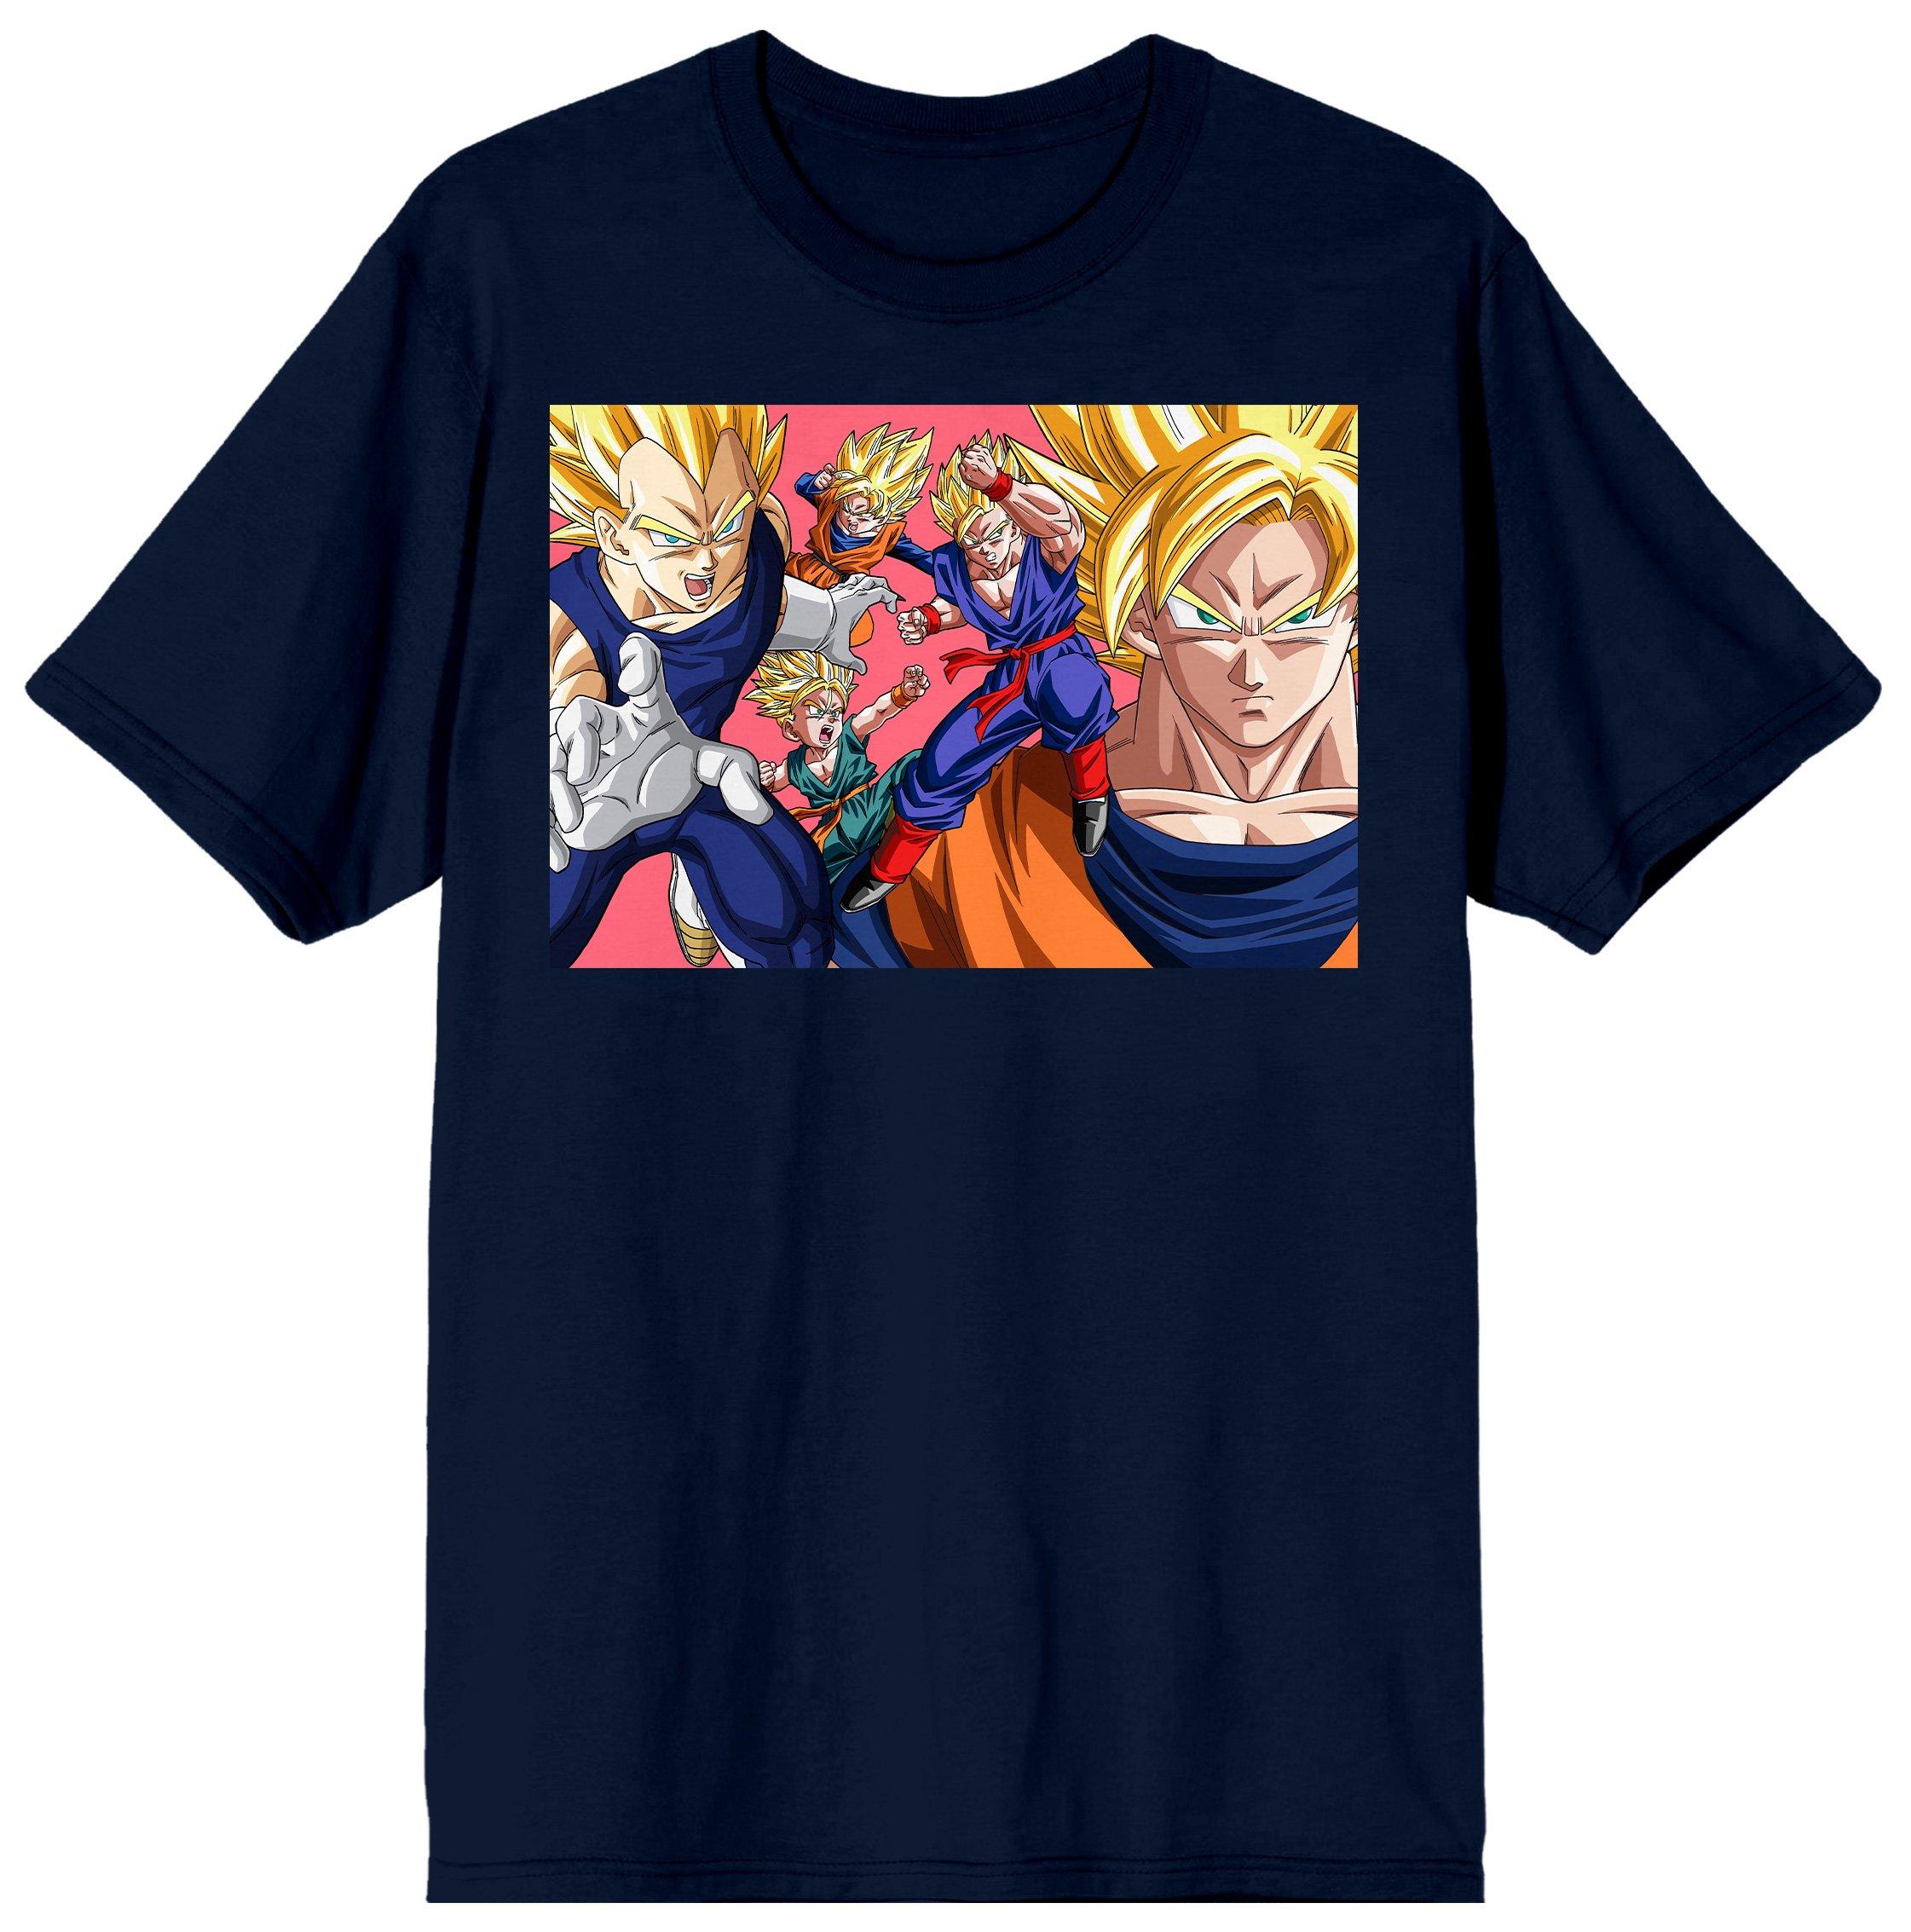 Dragon Ball Z Character Group Men's Anime Navy Blue Short Sleeve Graphic T-Shirt, Size: Medium, Bioworld Merchandising